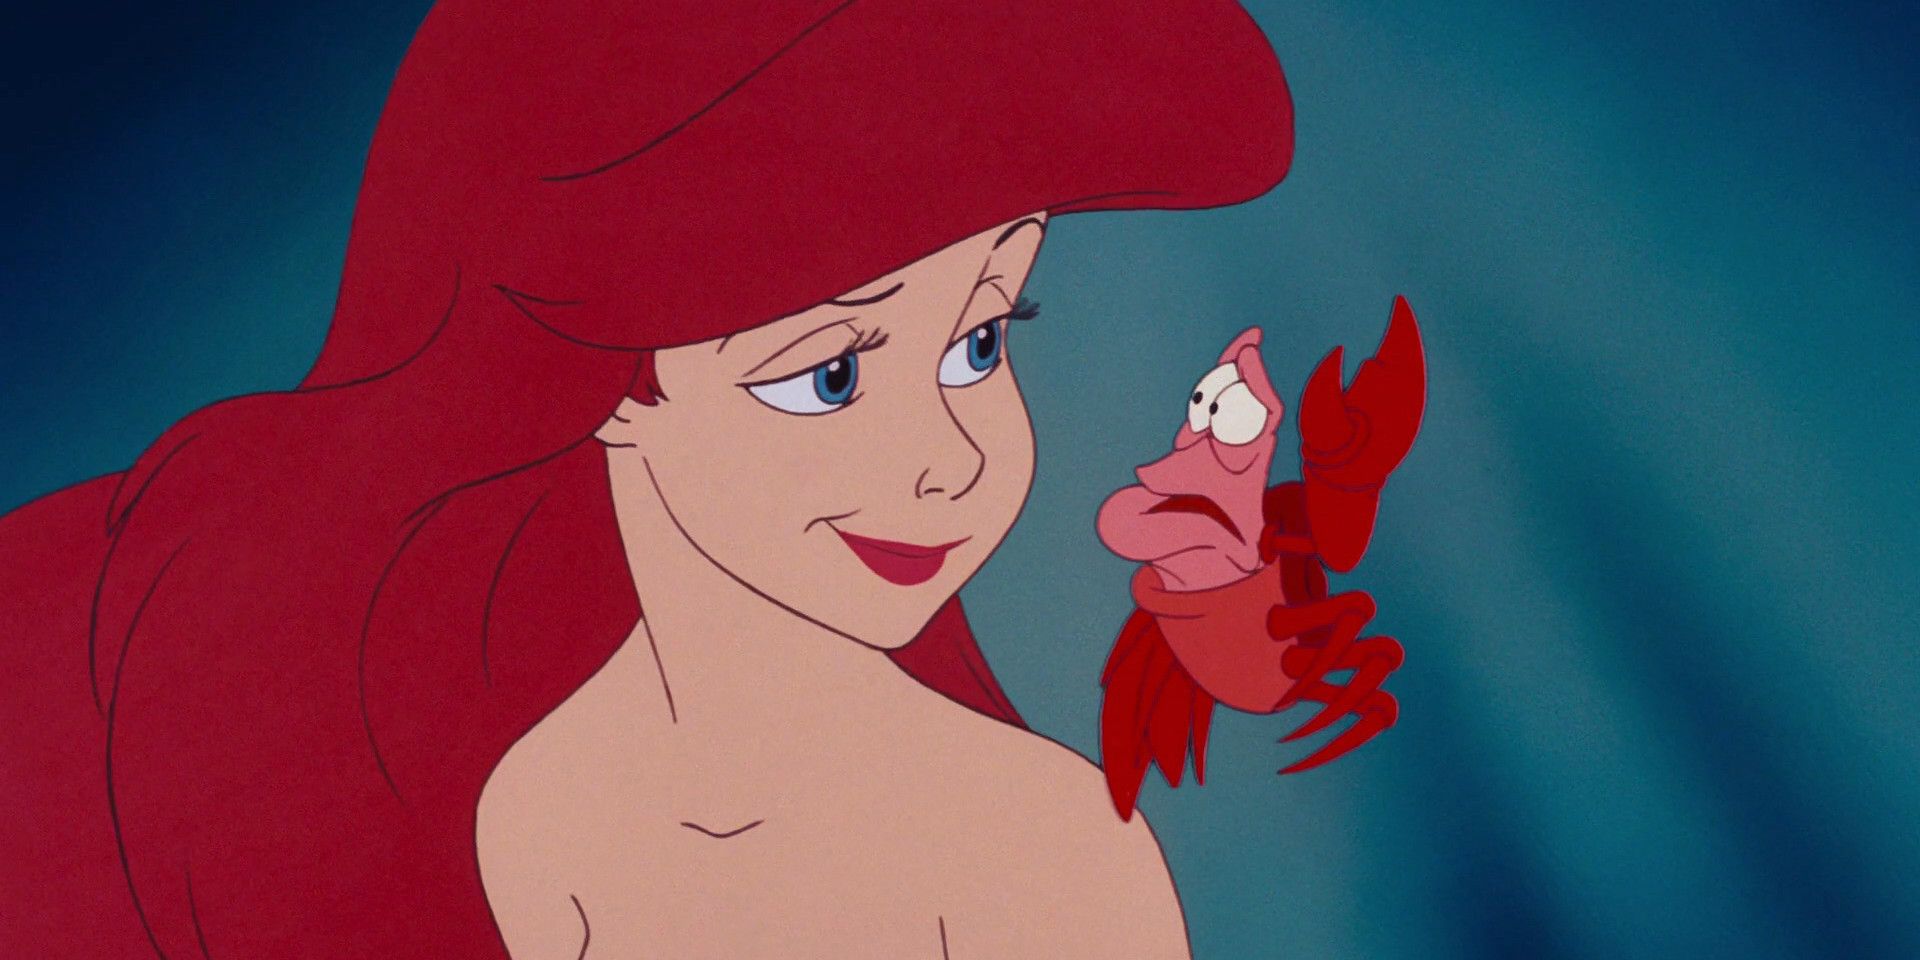 Sebastian looking worried and Ariel smiles in the animated Little Mermaid